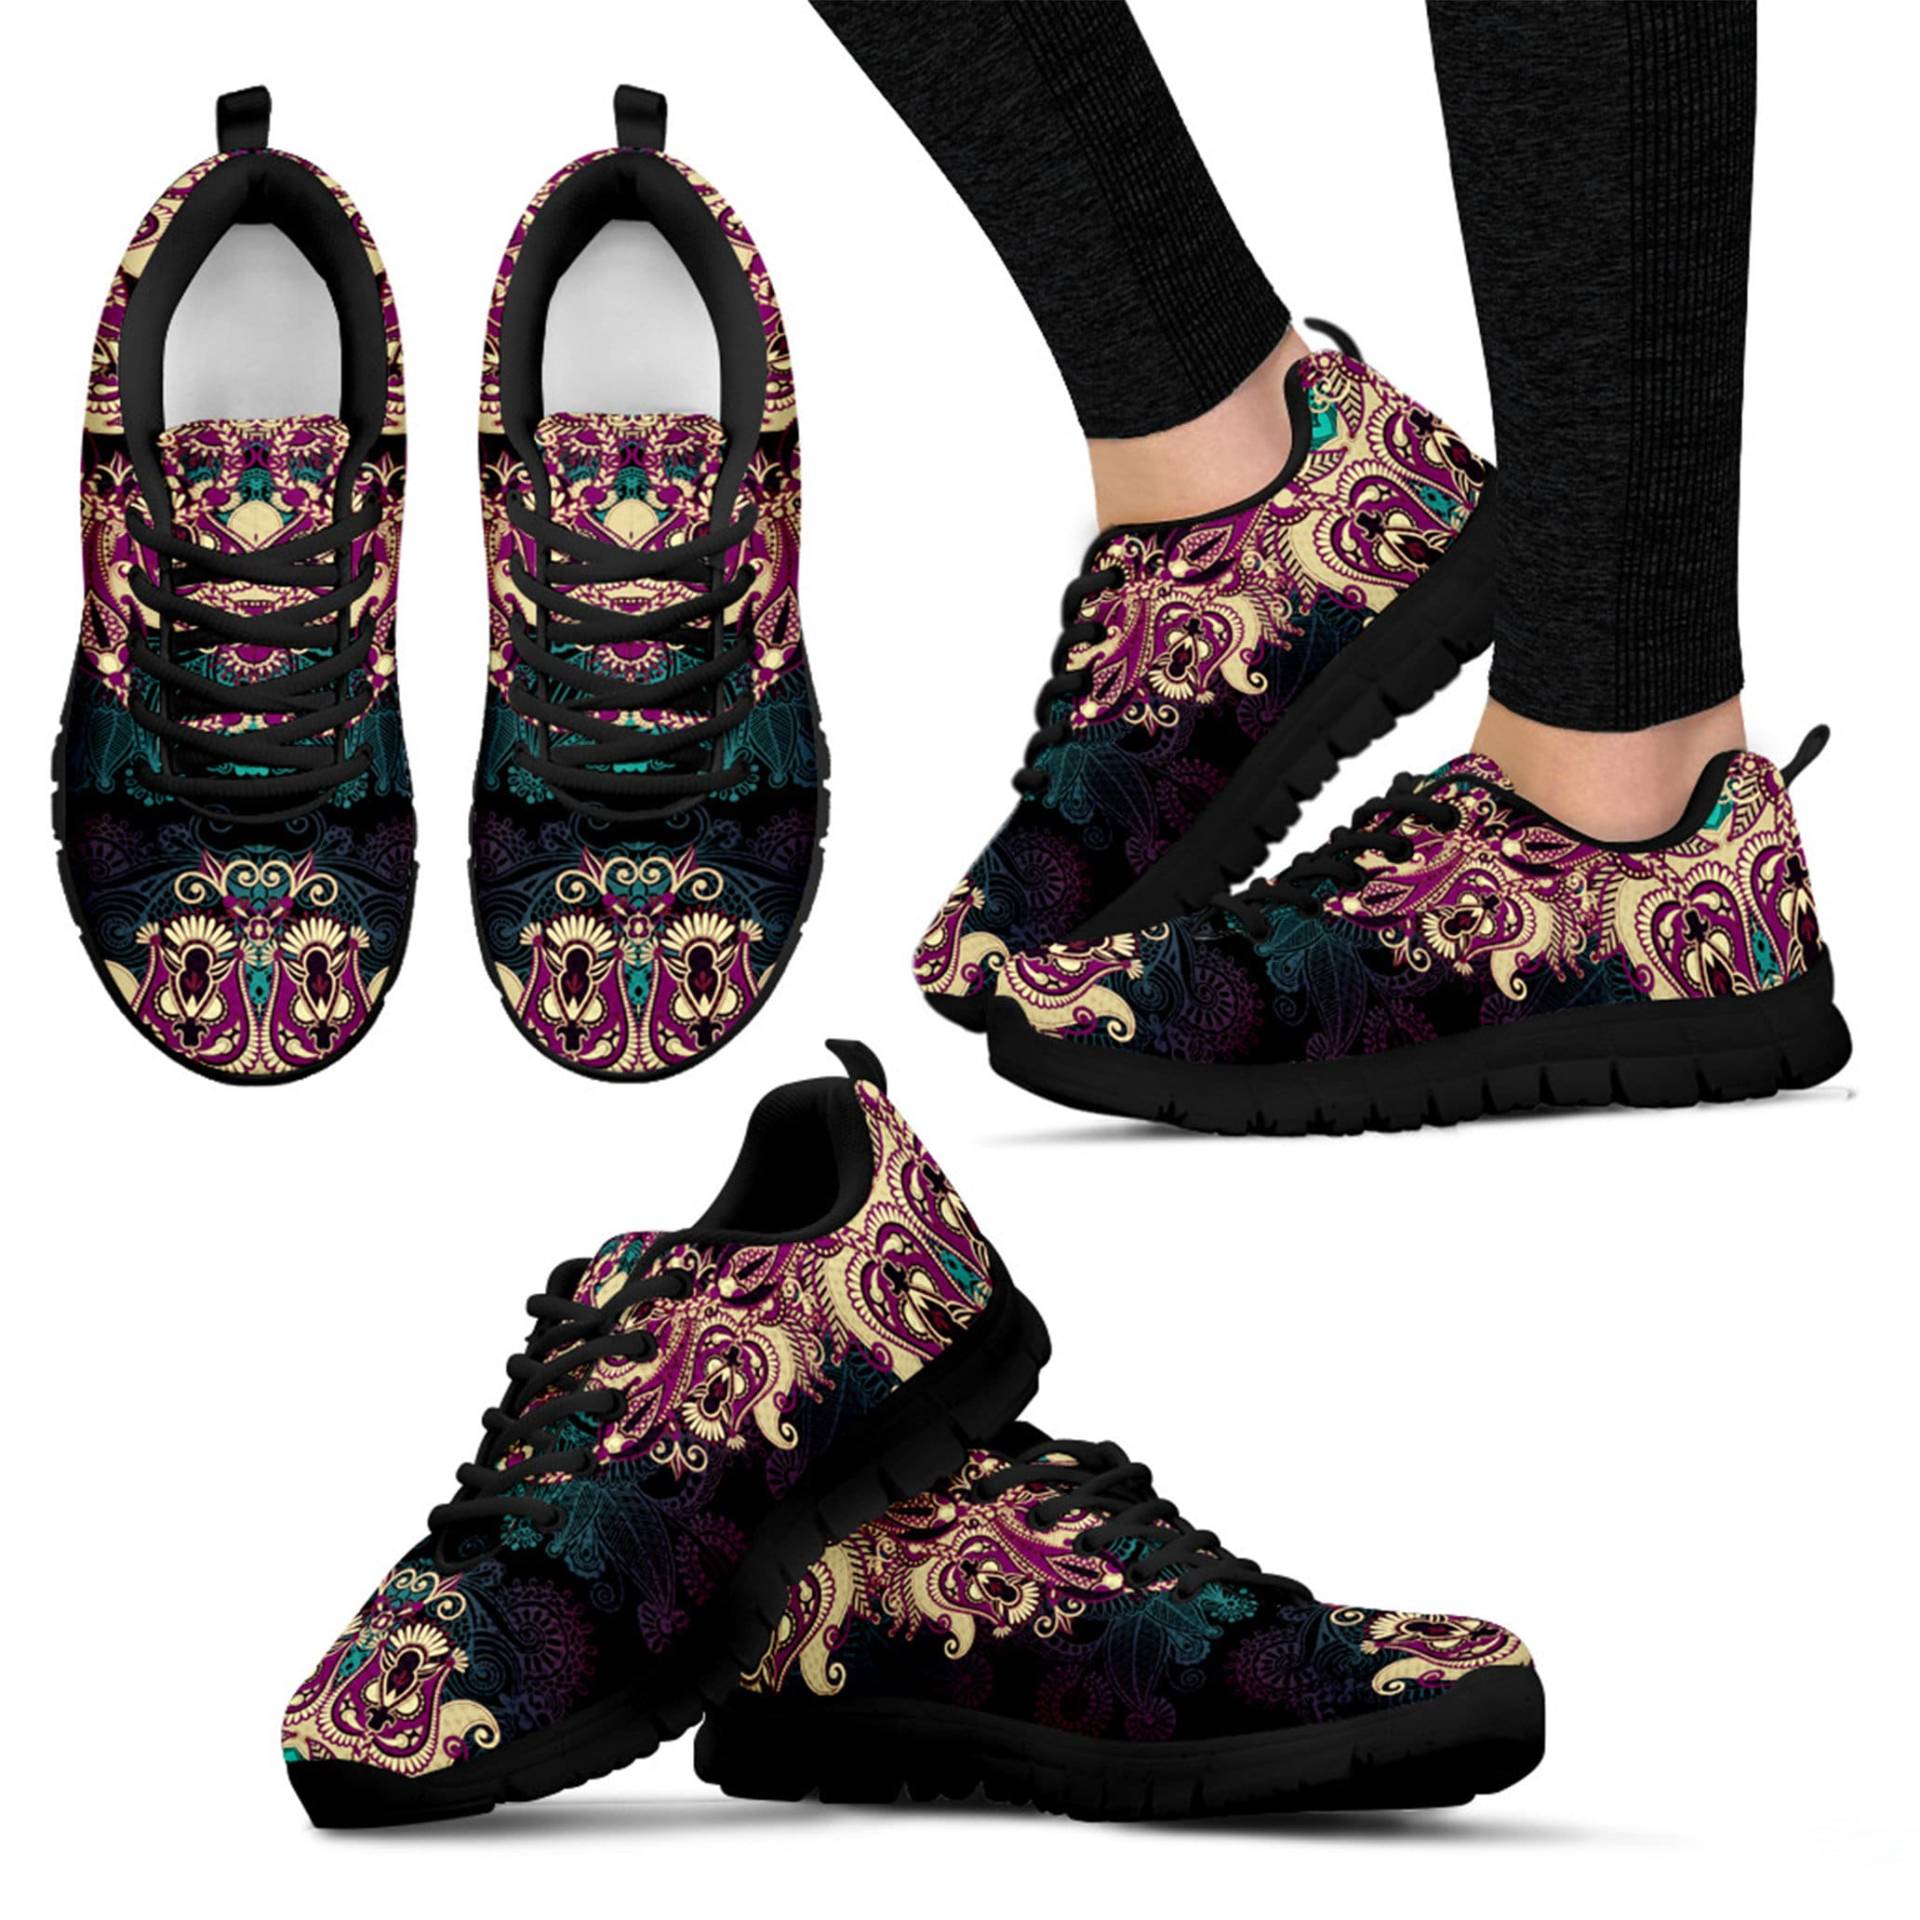 Damen Paisley Mandala Sneakers, Geburtstagsgeschenke Für Freundin, Black Tie Sneakers Cute Schuhe von TopsAndToes